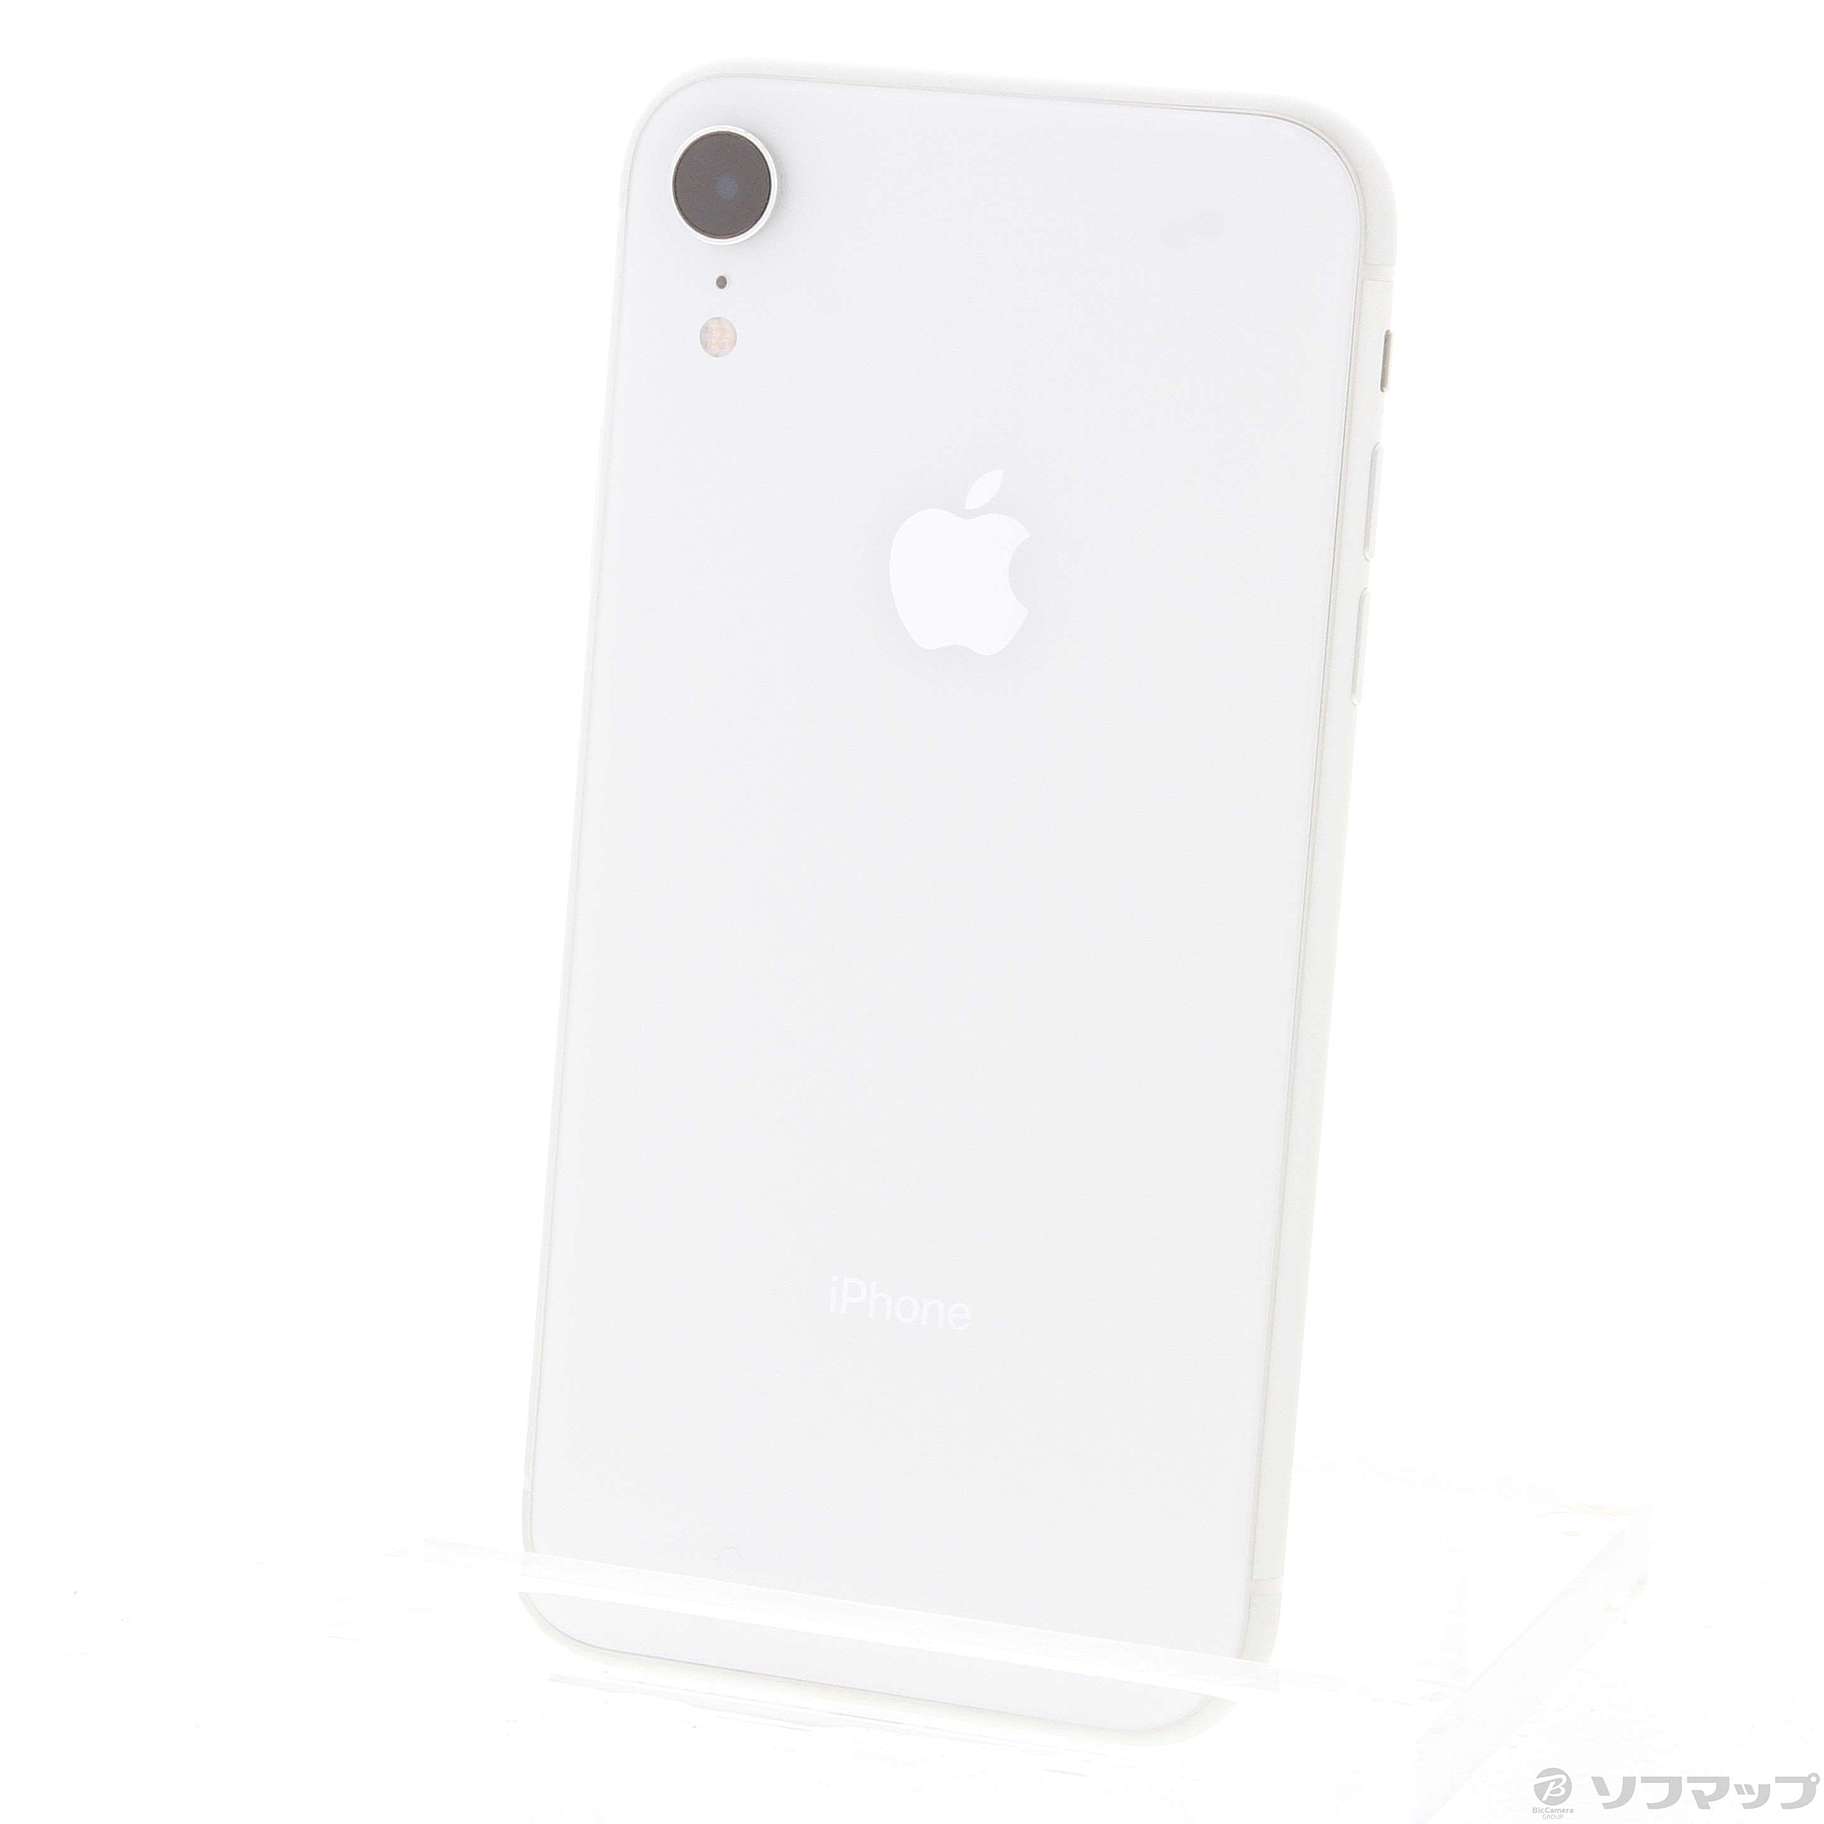 iPhone XR White 256 GB SIMフリー - スマートフォン本体